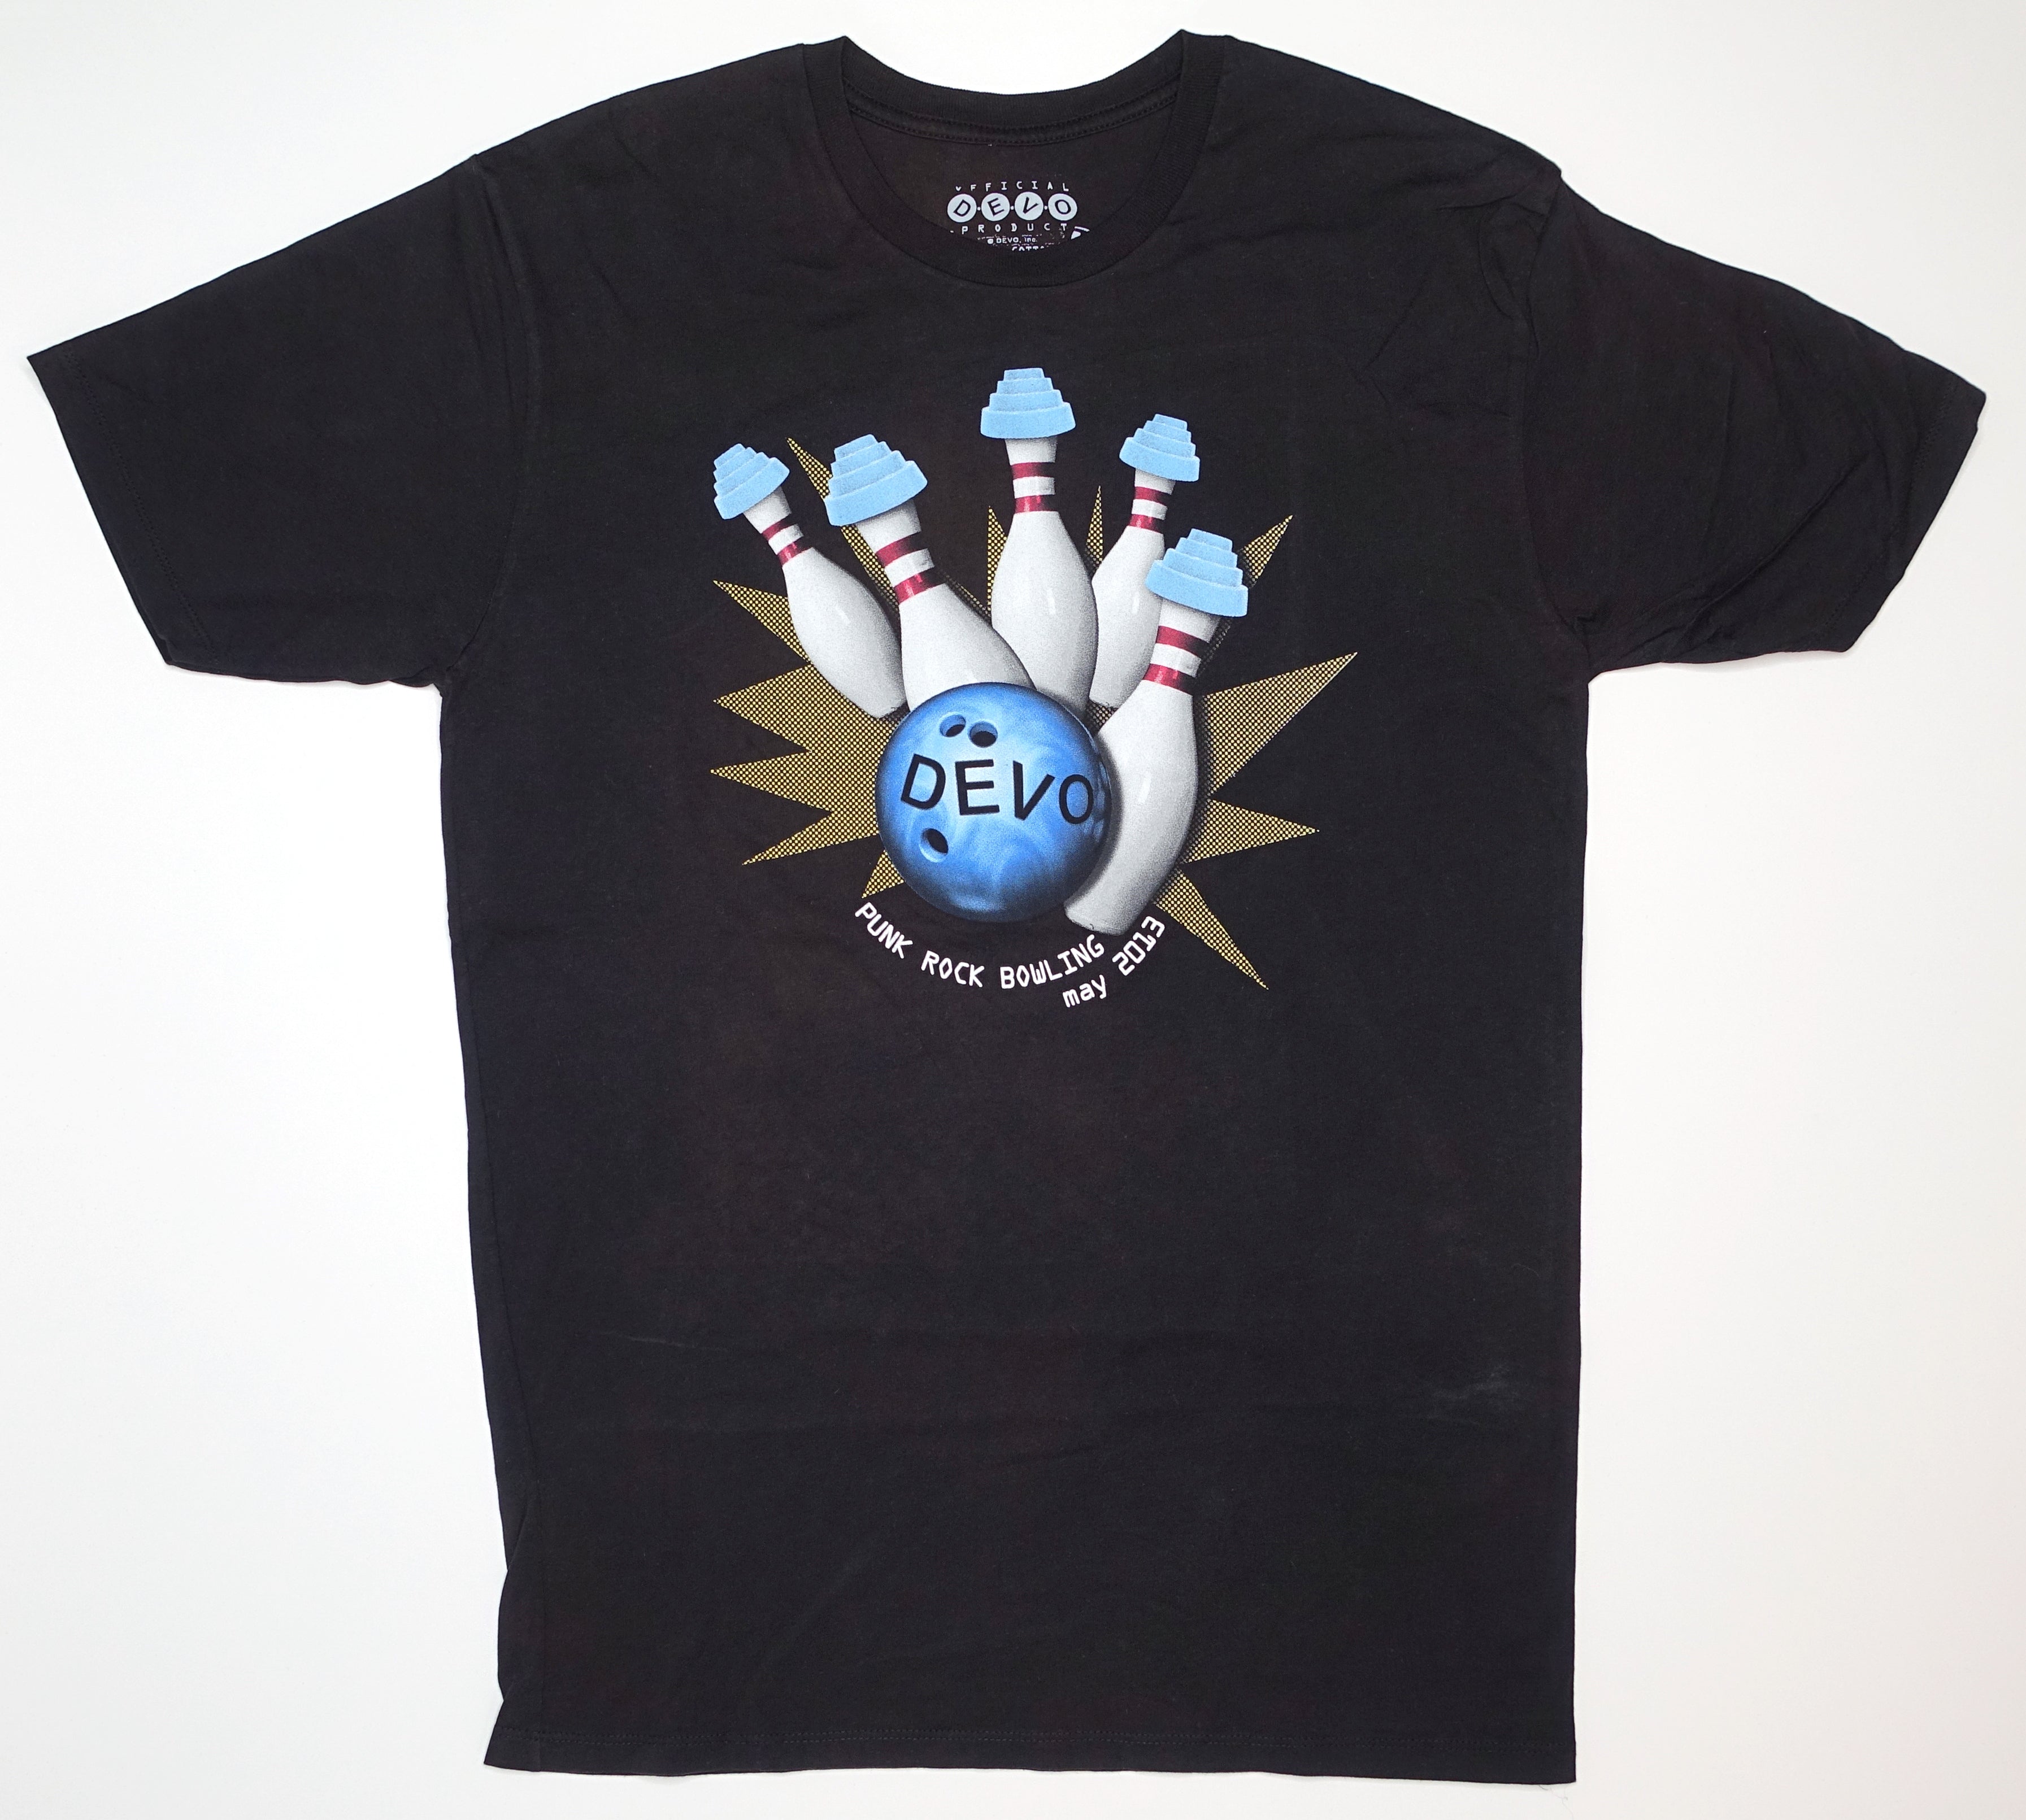 Devo – Punk Rock Bowling May 2013 Tour Shirt Size Large